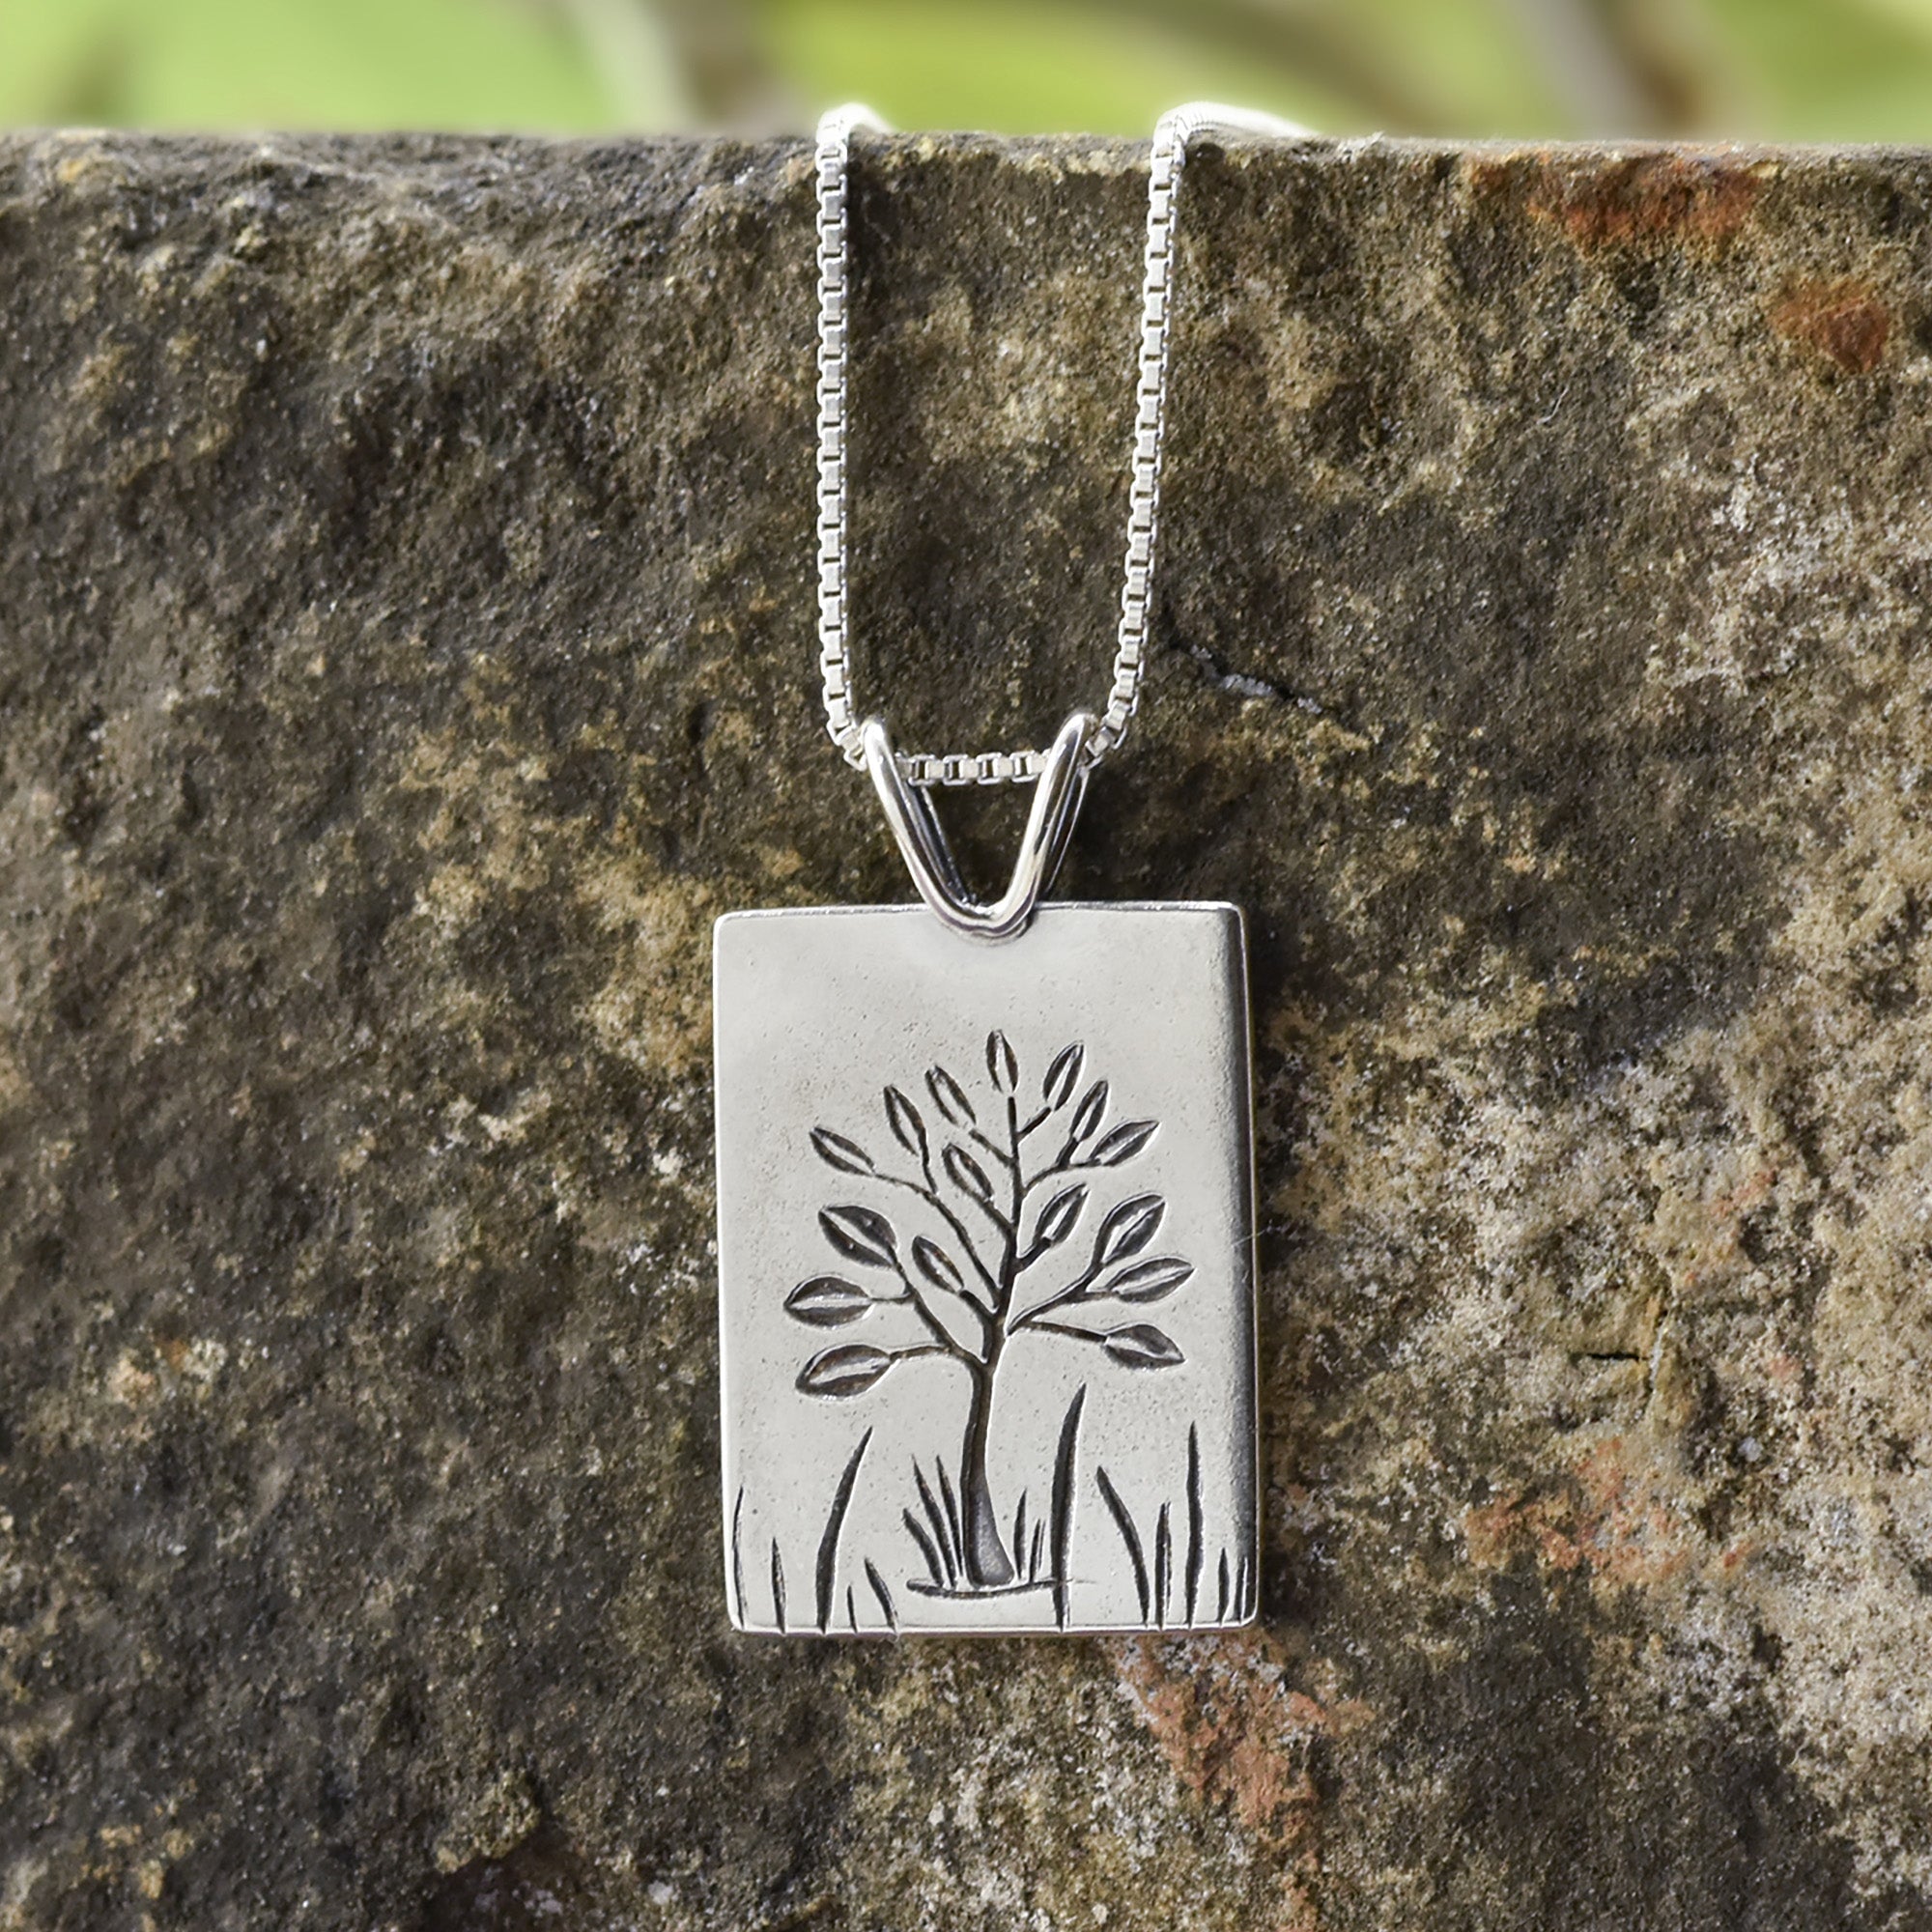 Reversible Solstice Tree Pendant - Silver Pendant   7098 - handmade by Beth Millner Jewelry